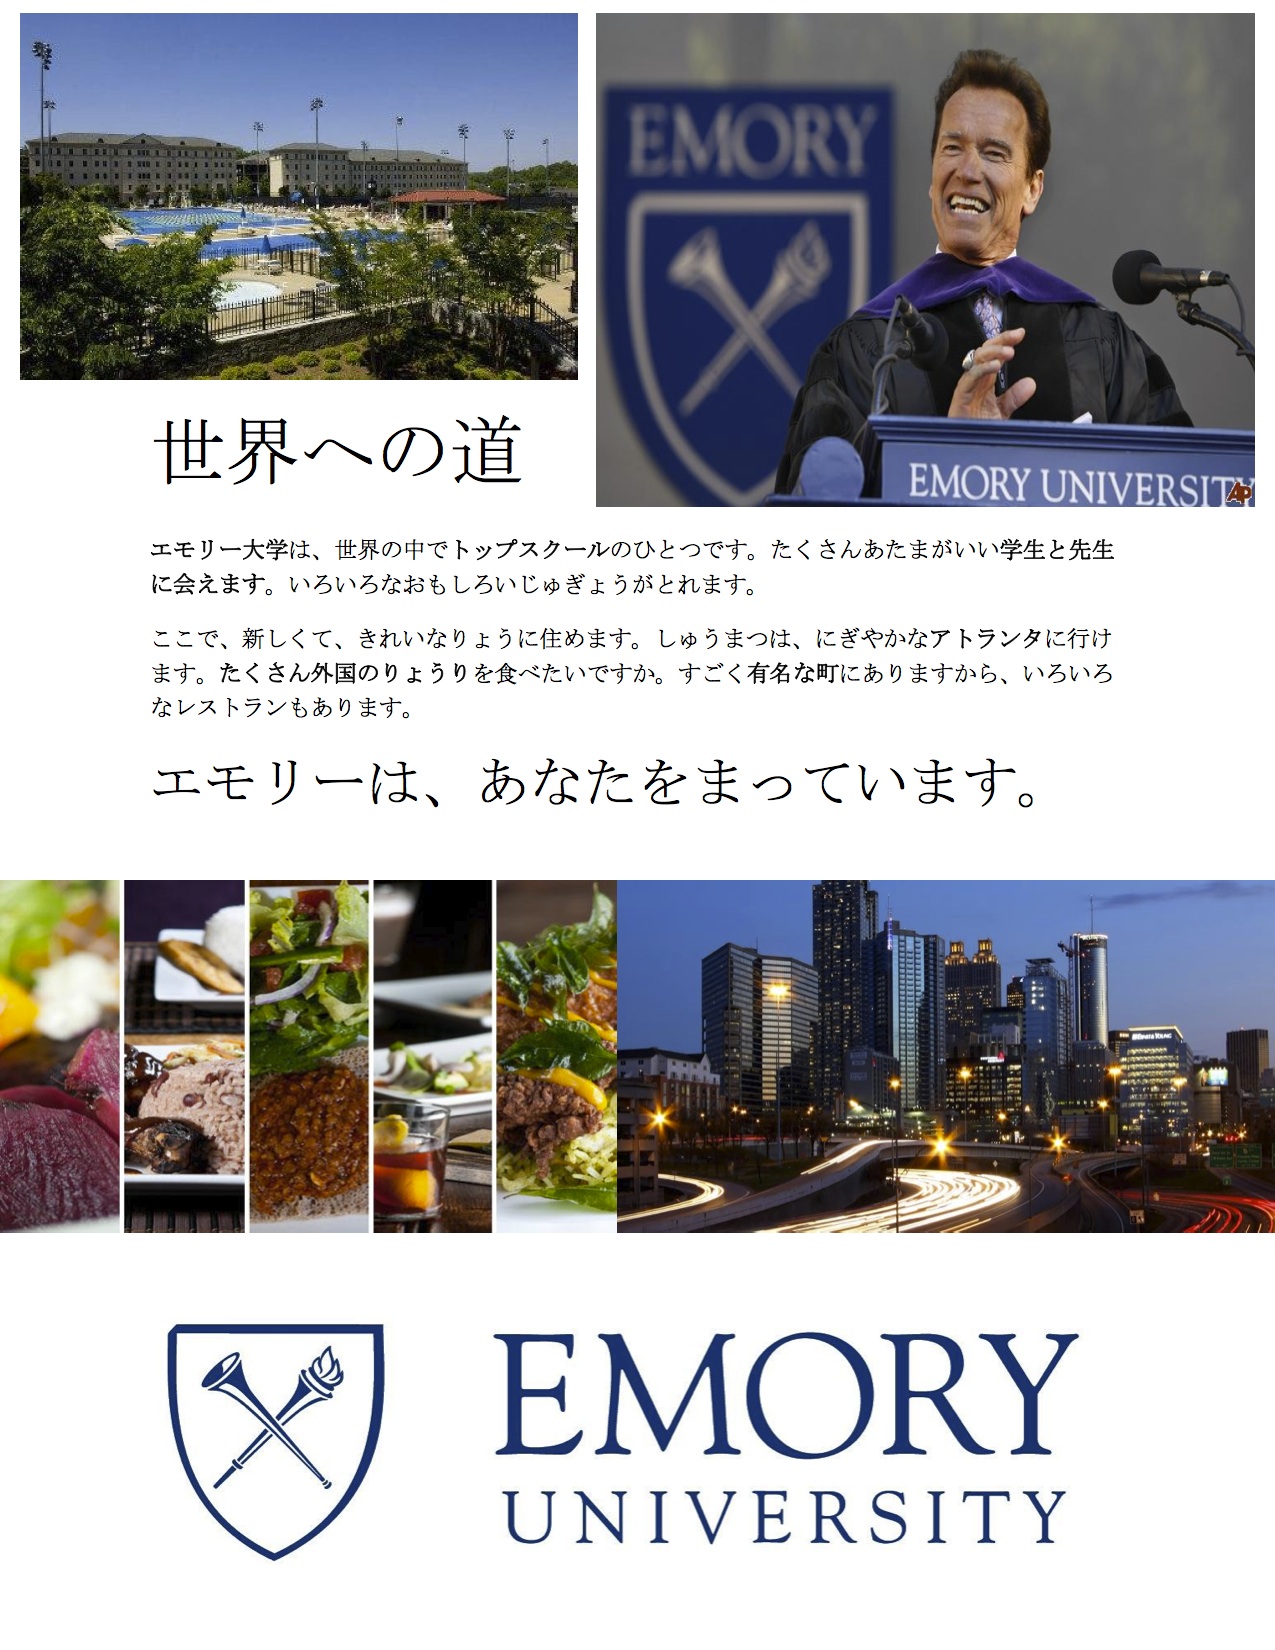 Jpn 101 102 Emory University Japanese Language Program